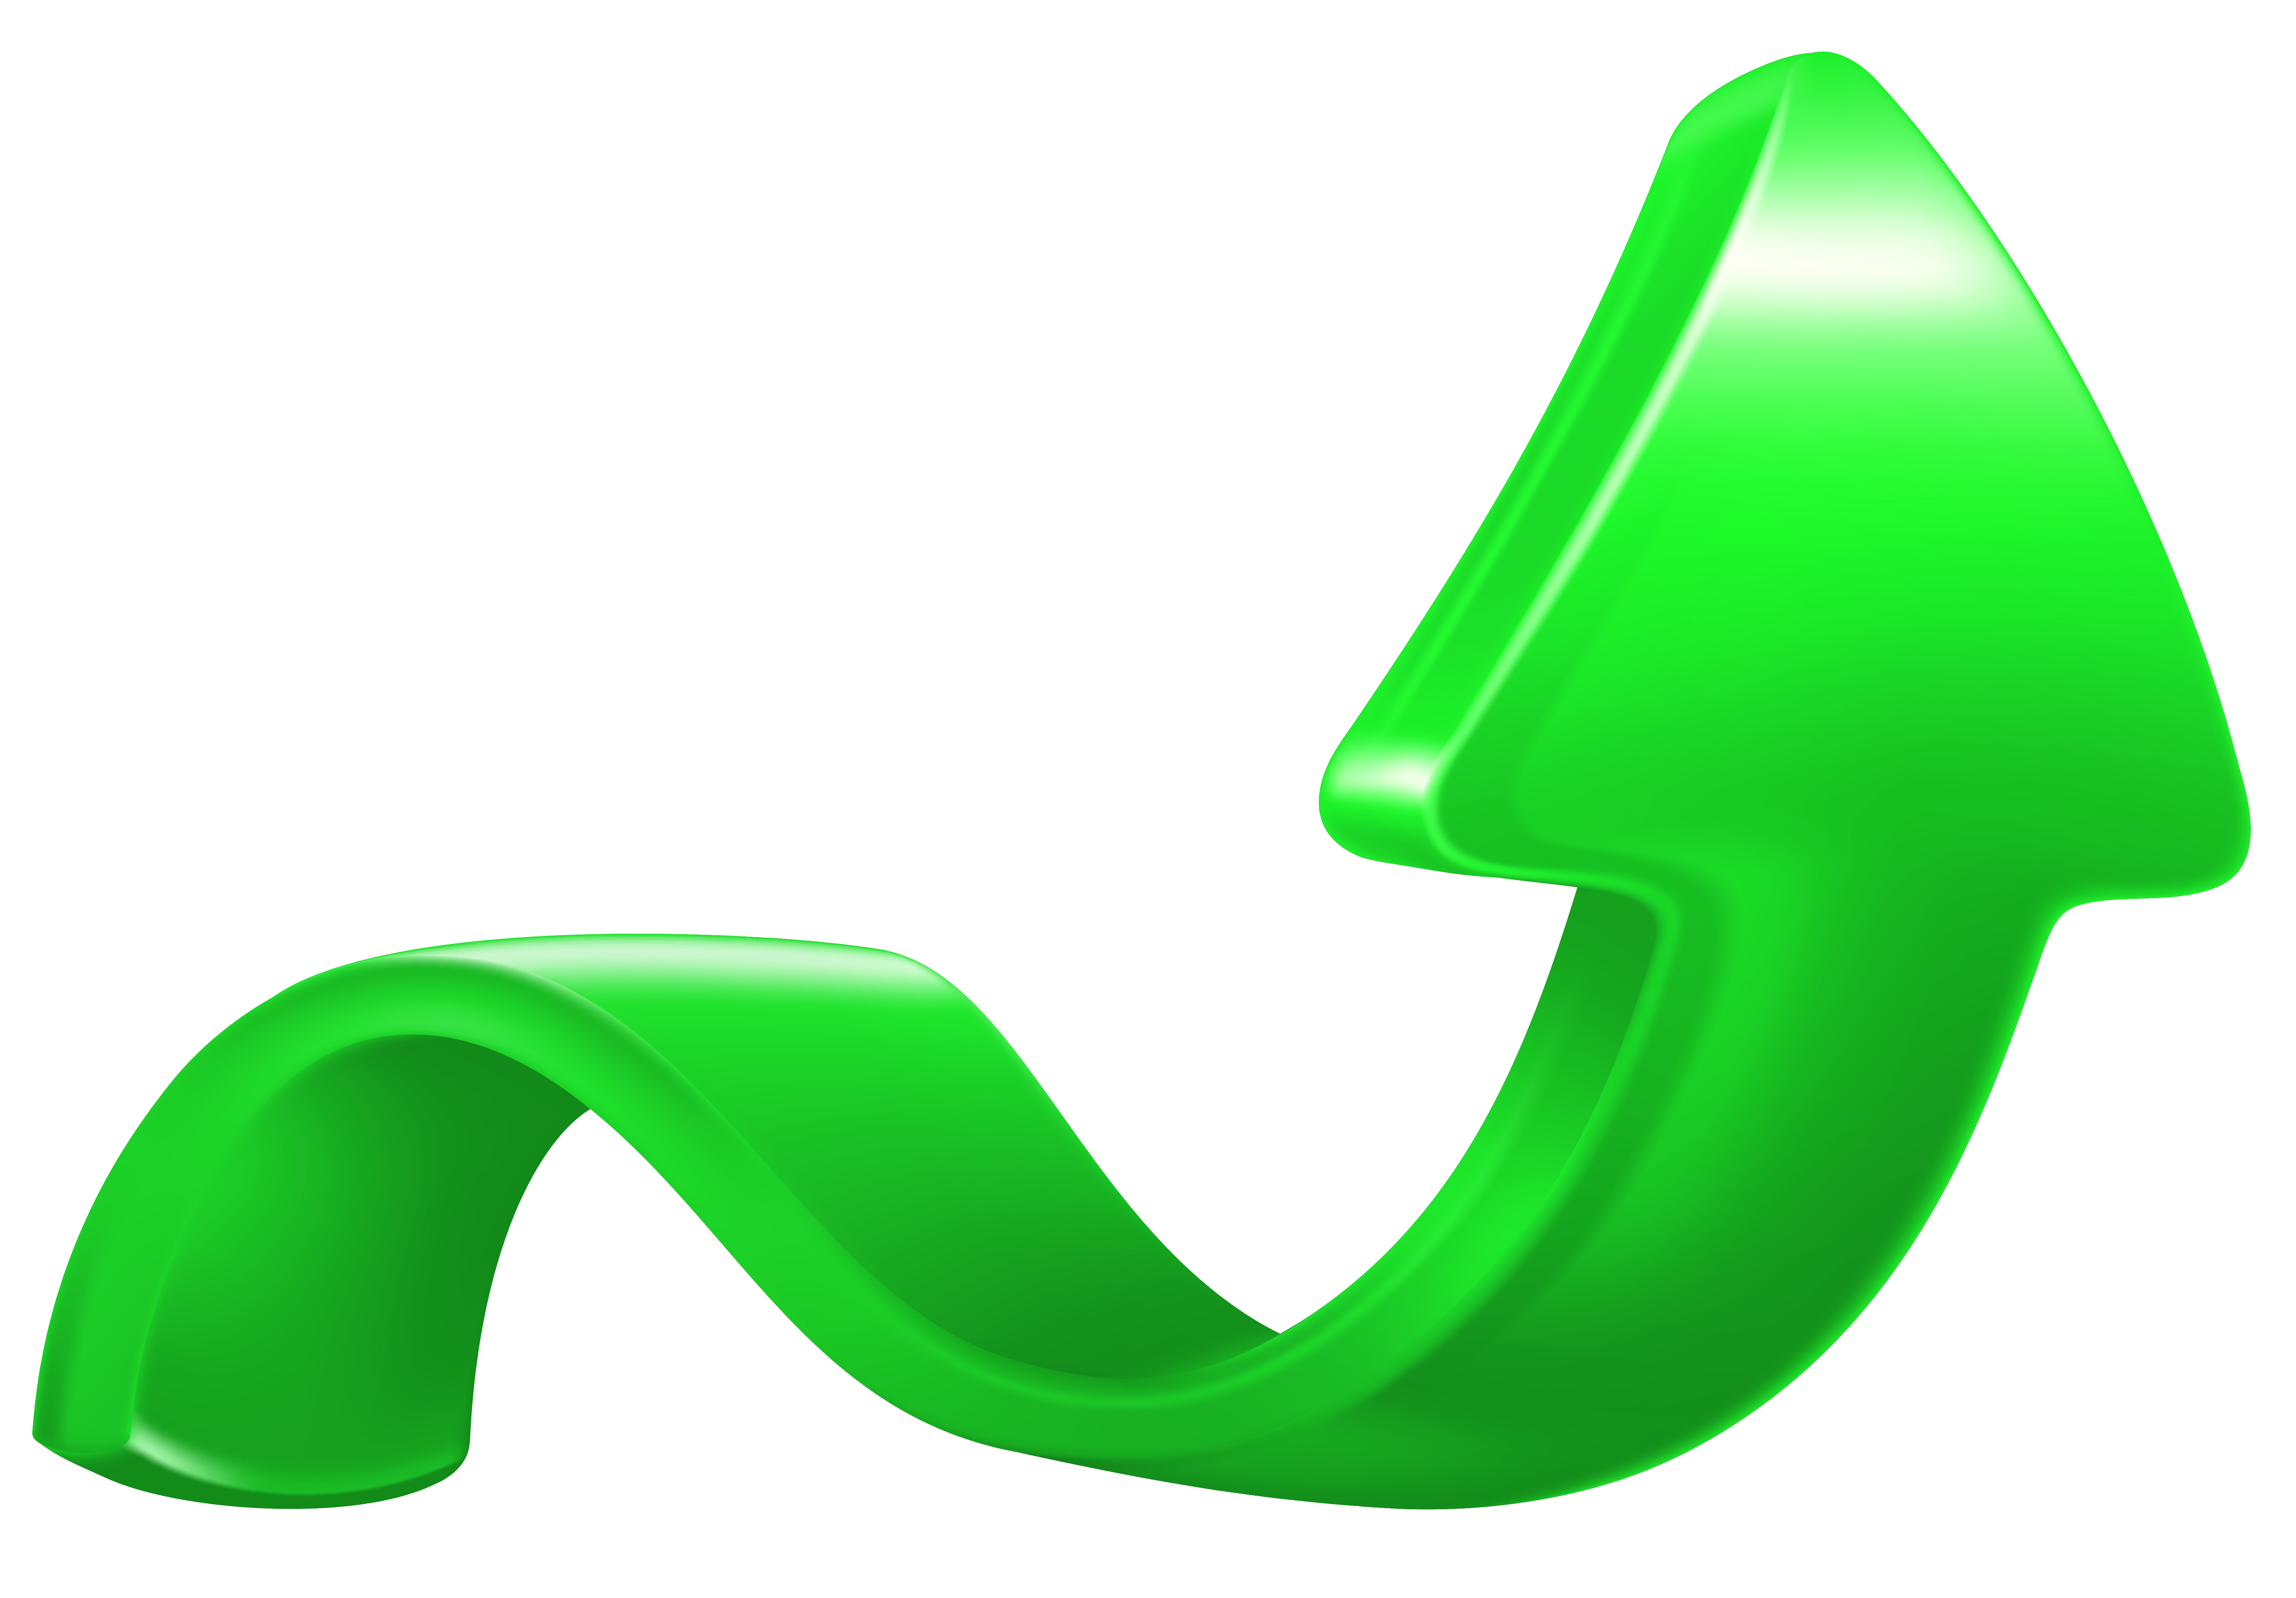 Increase Arrow Green PNG Clip Art Image